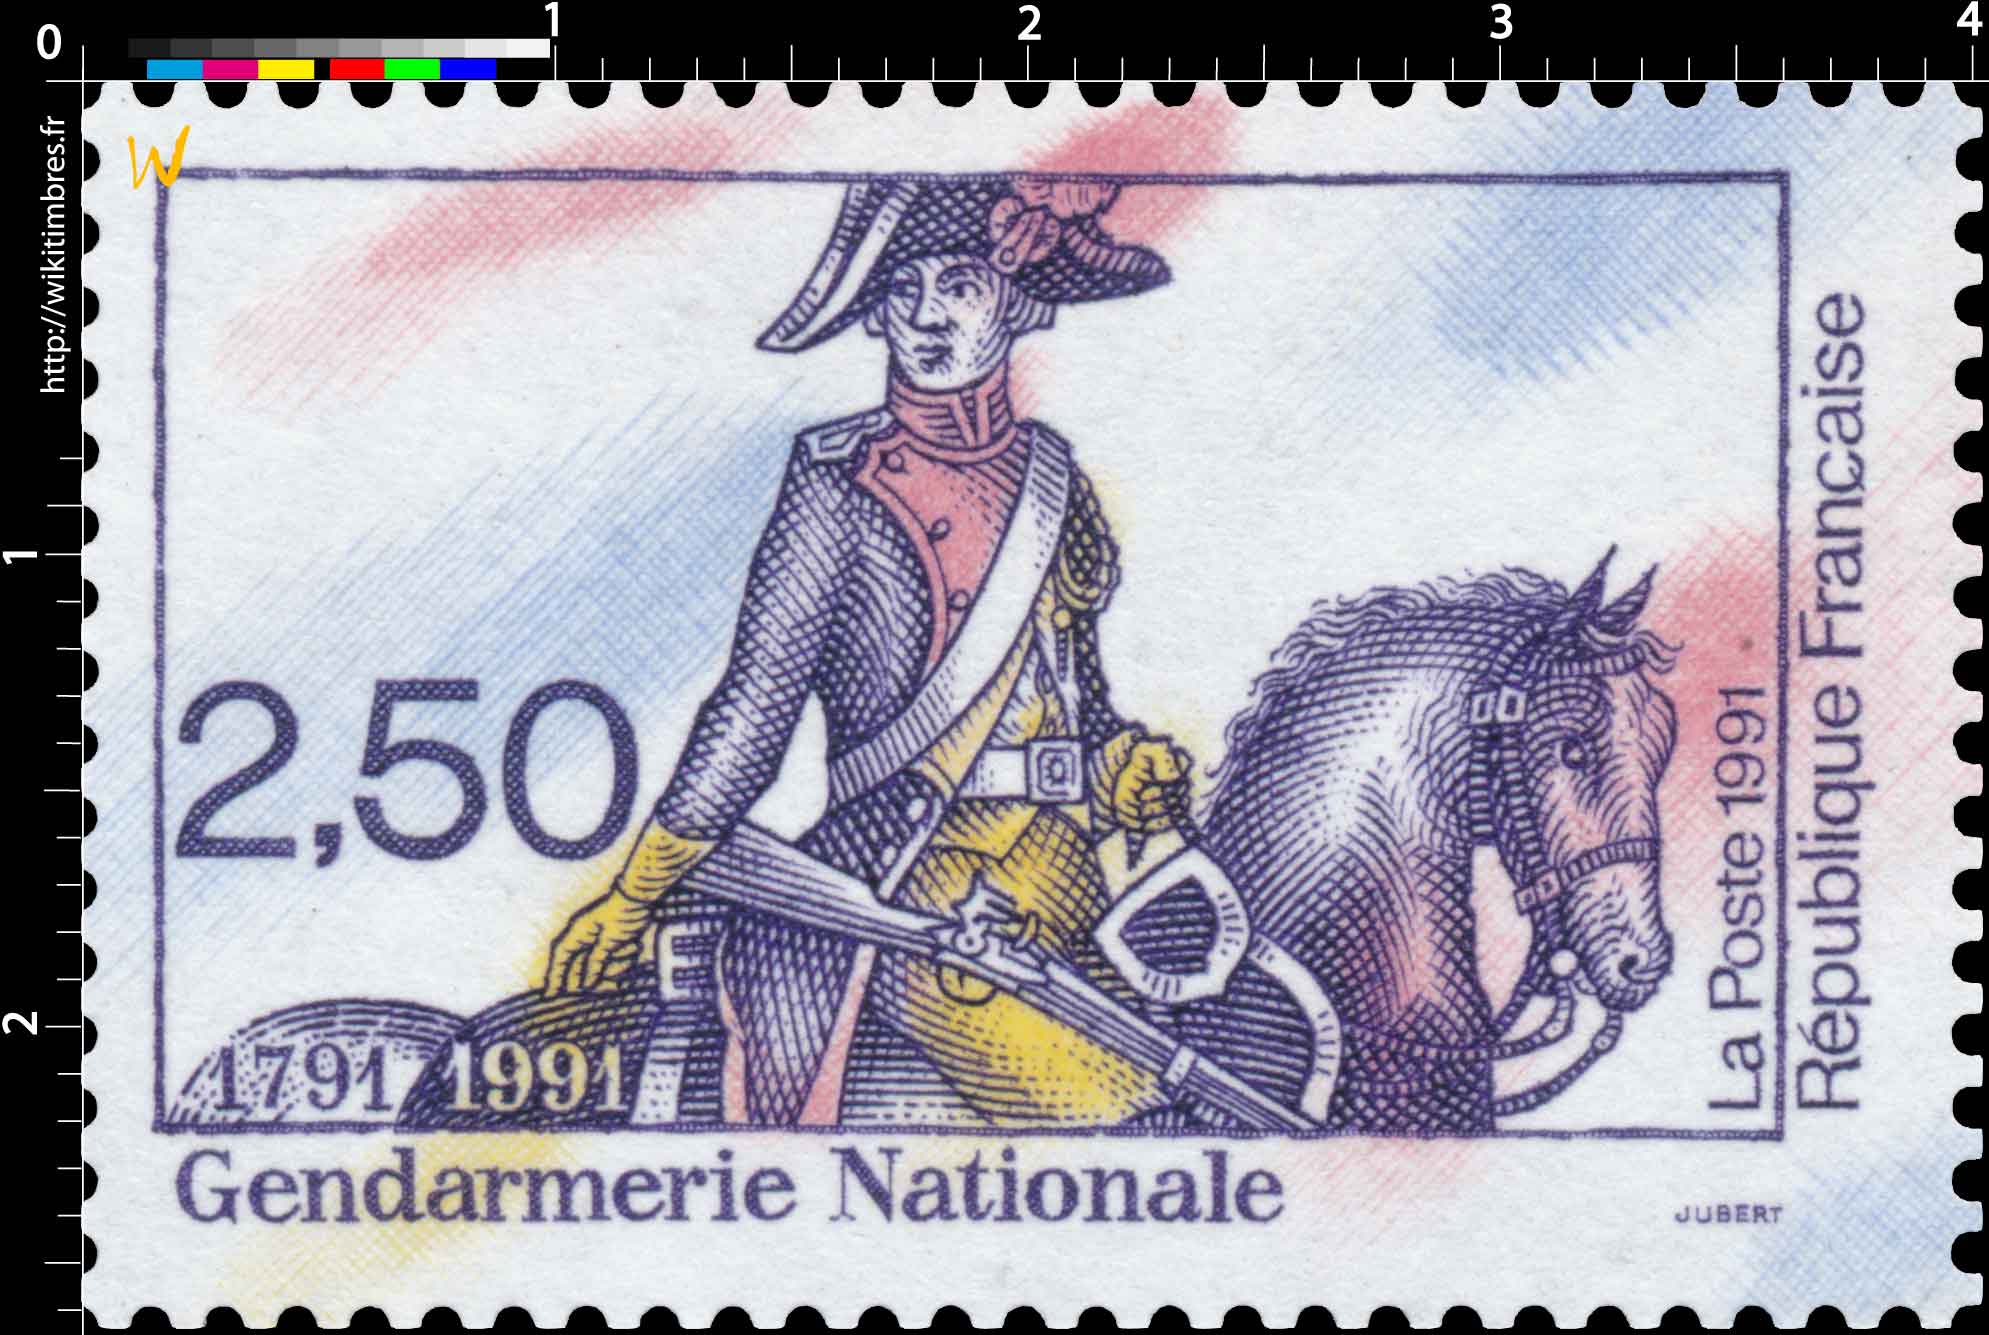 1991 Gendarmerie Nationale 1791-1991